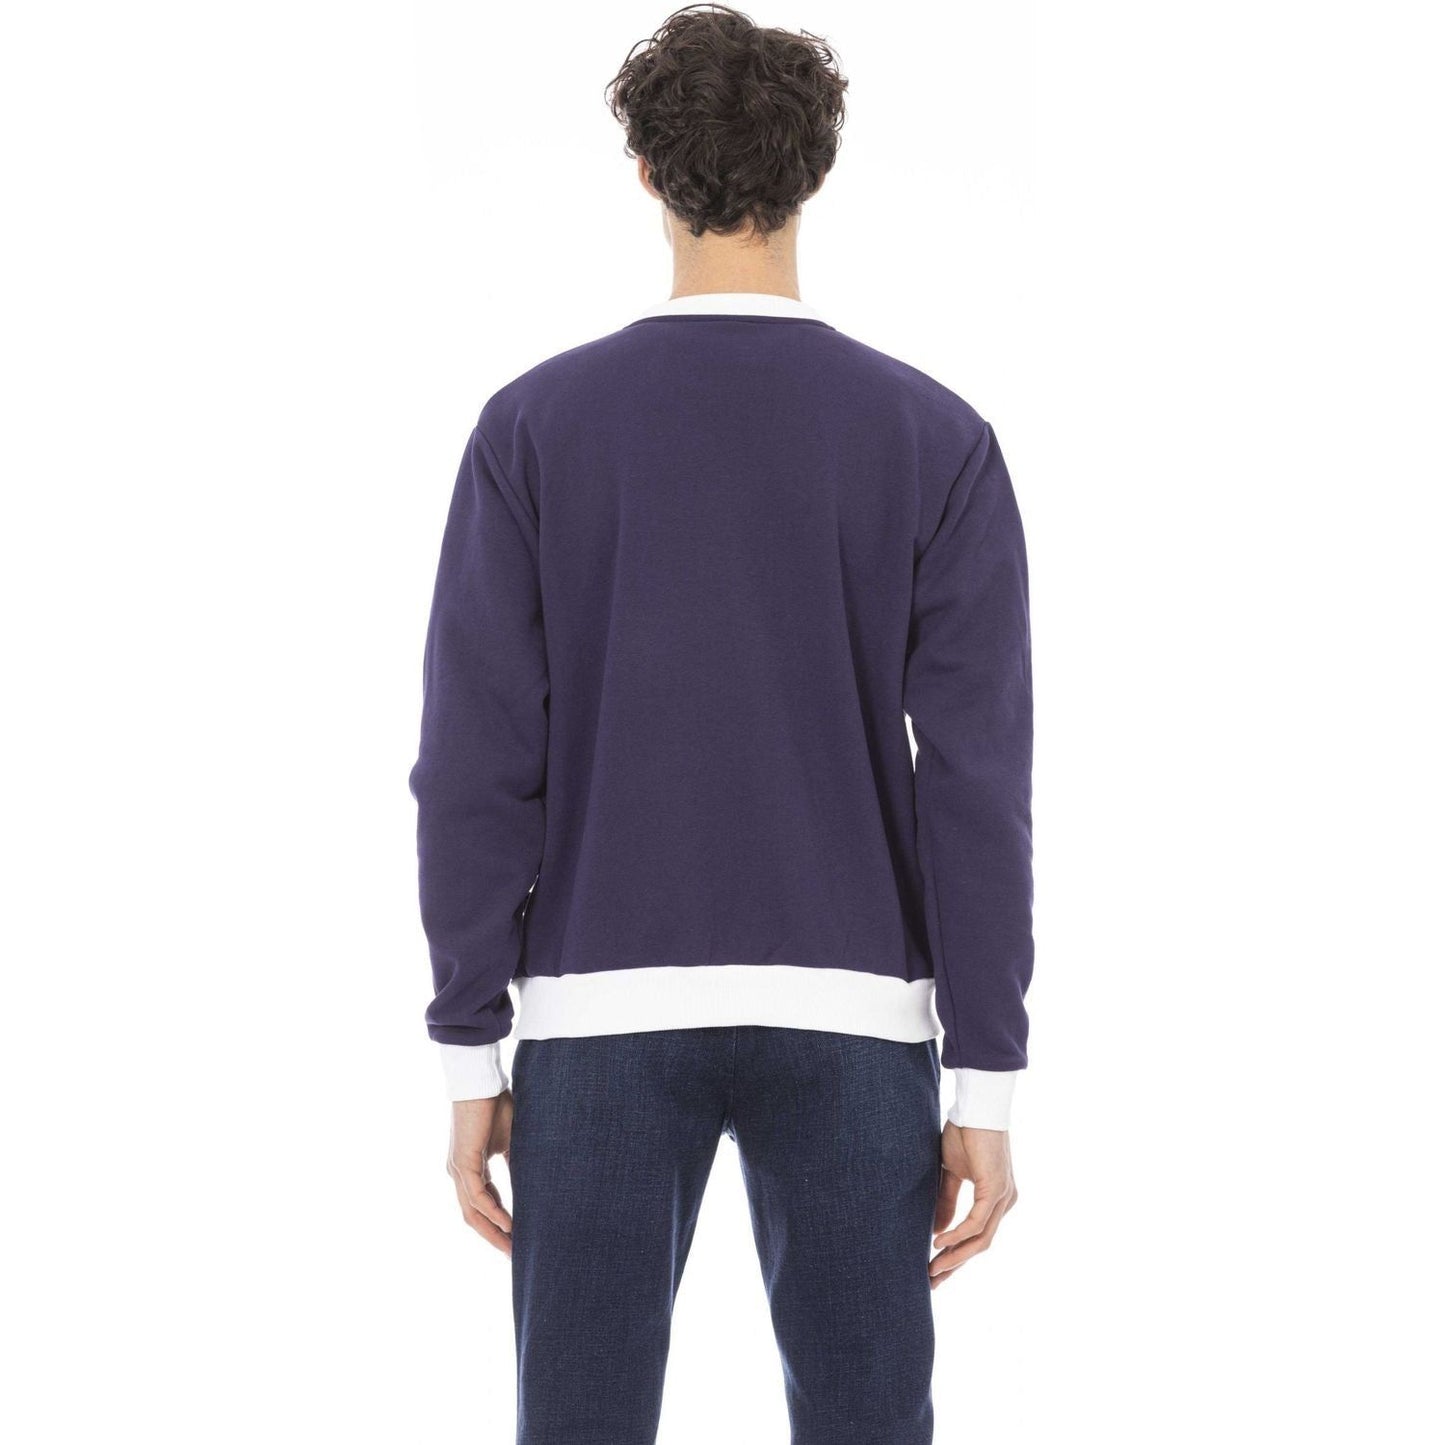 Baldinini Trend Elegant Purple Cotton Sweatshirt purple-cotton-sweater